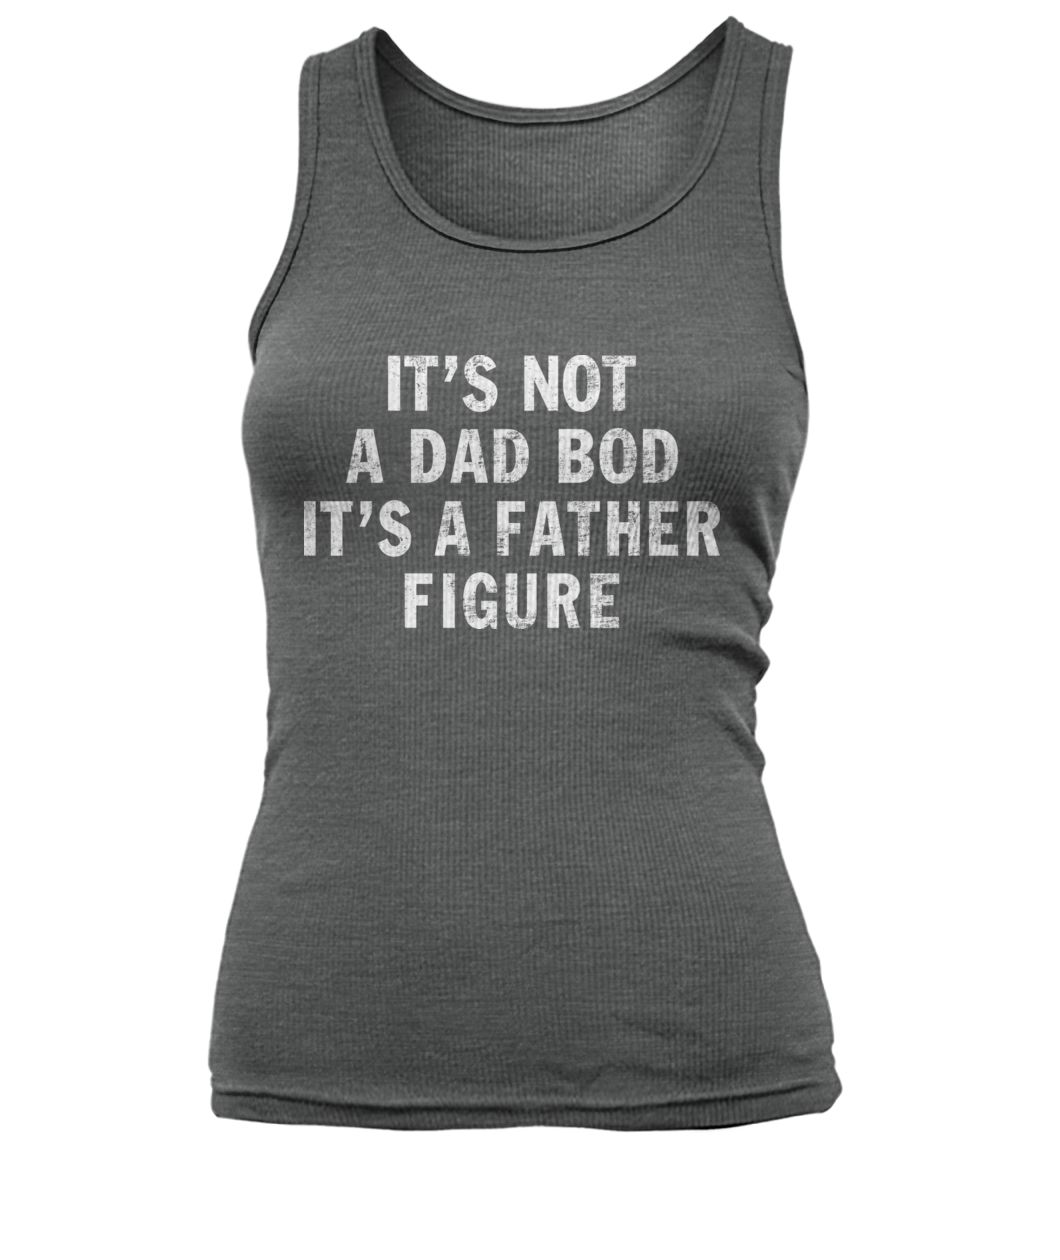 It's not a dad bob it's a father figure women's tank top